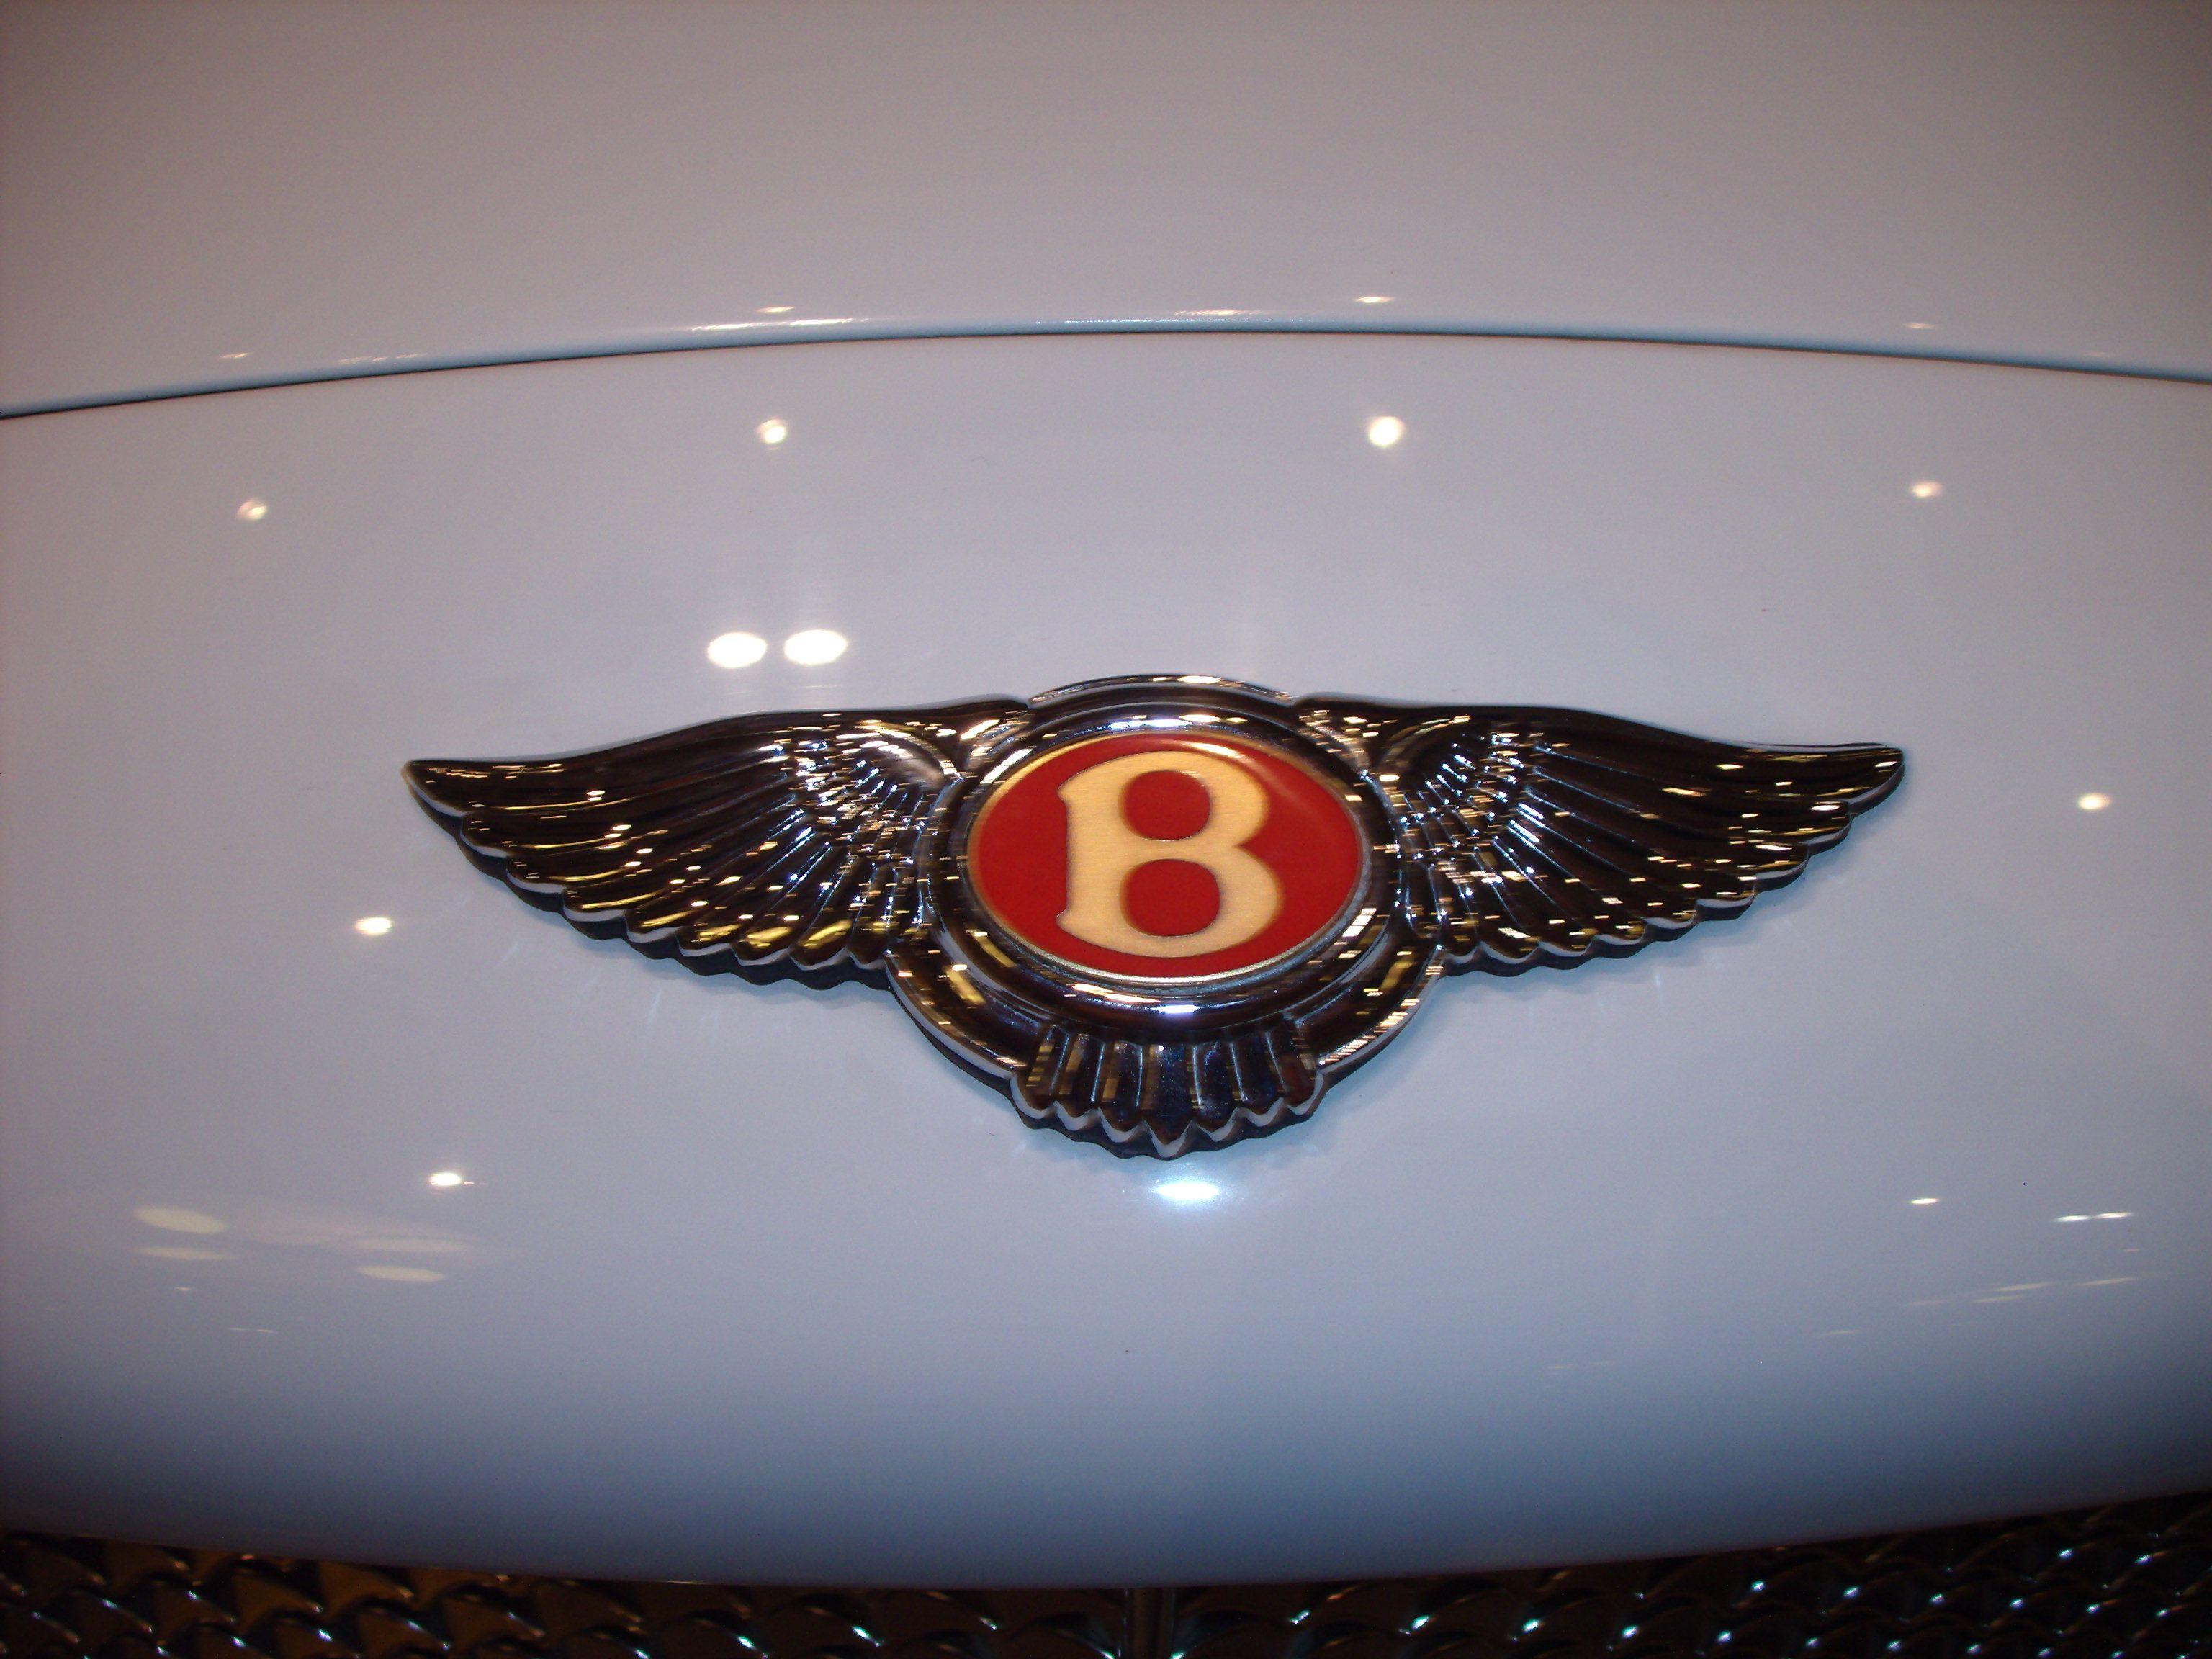 Bentley Logo - File:Bentley Logo on White Car.jpg - Wikimedia Commons